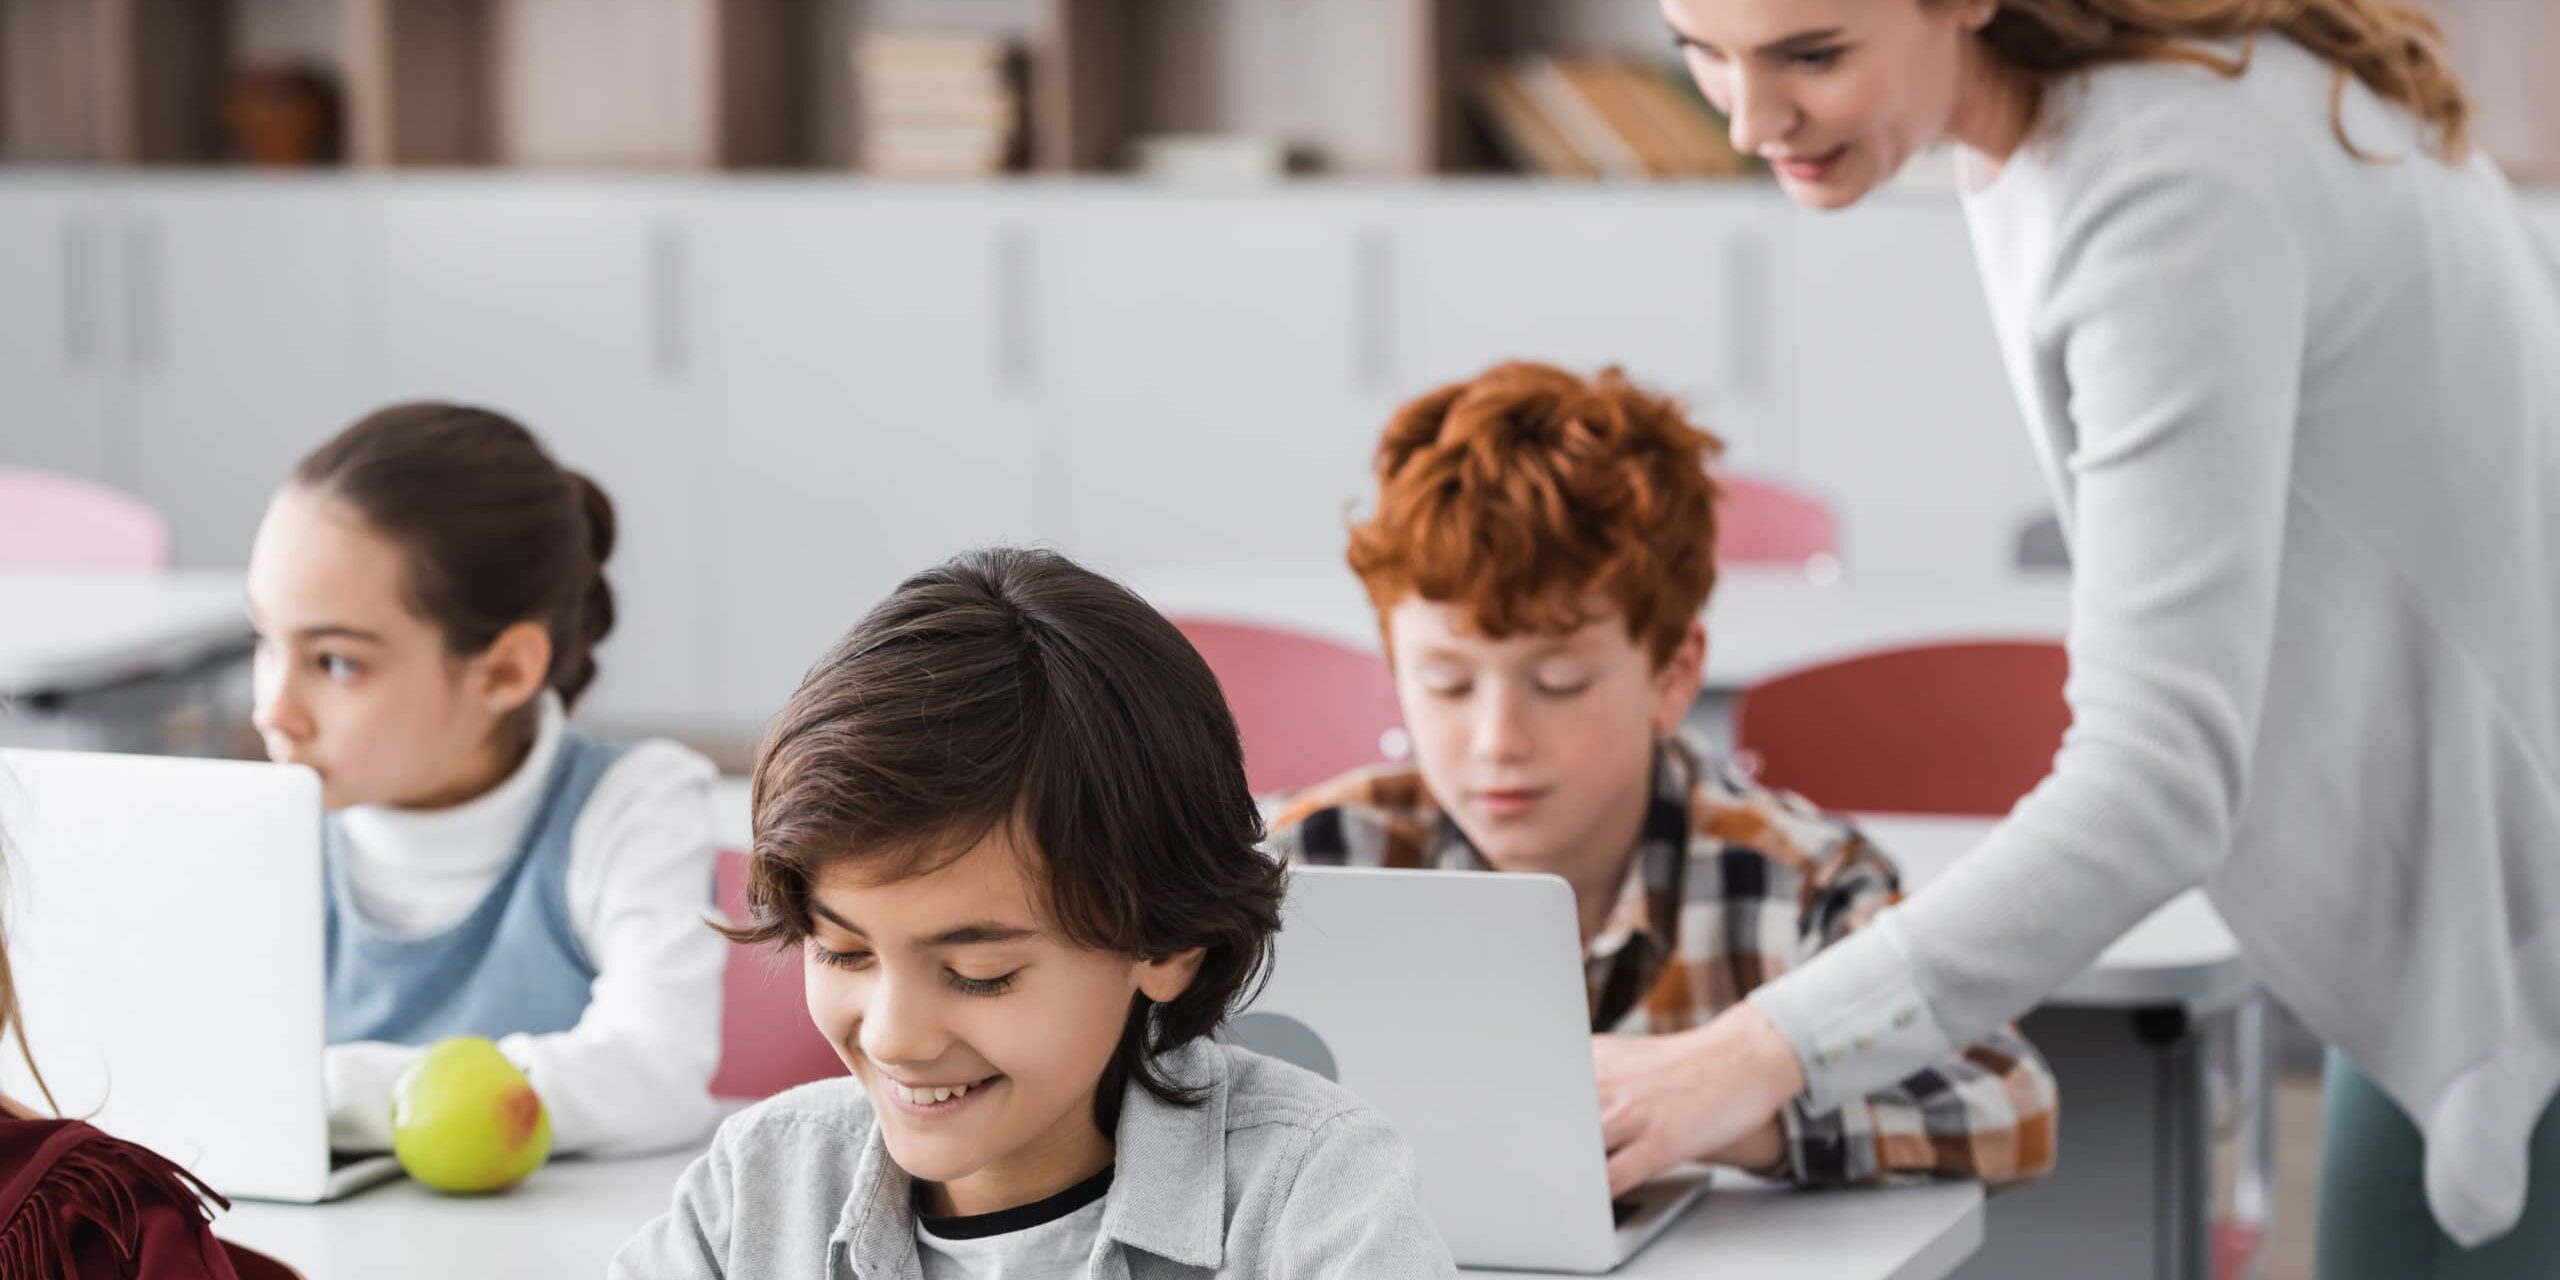 children in school with computers, teacher showing student